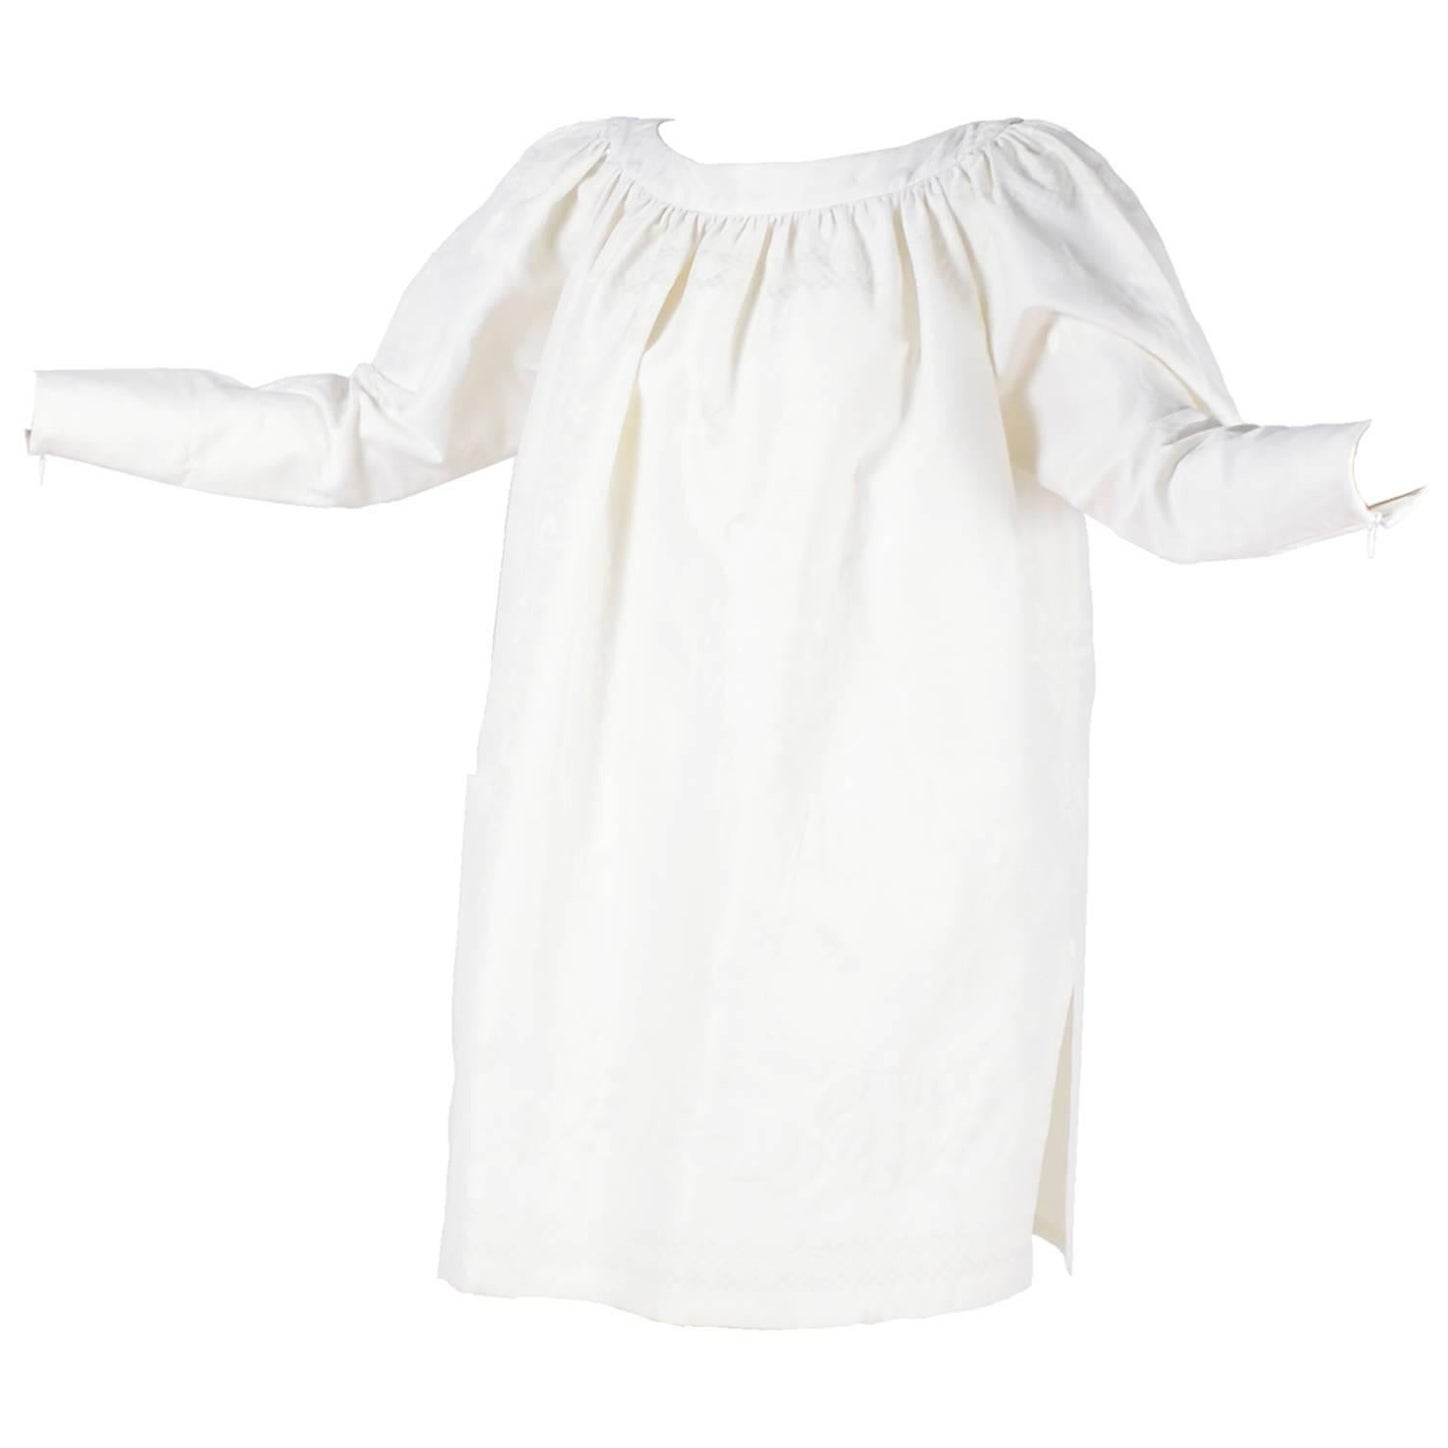 1980s Christian Lacroix Vintage White Linen Damask Tunic or Dress w Original Tag For Sale